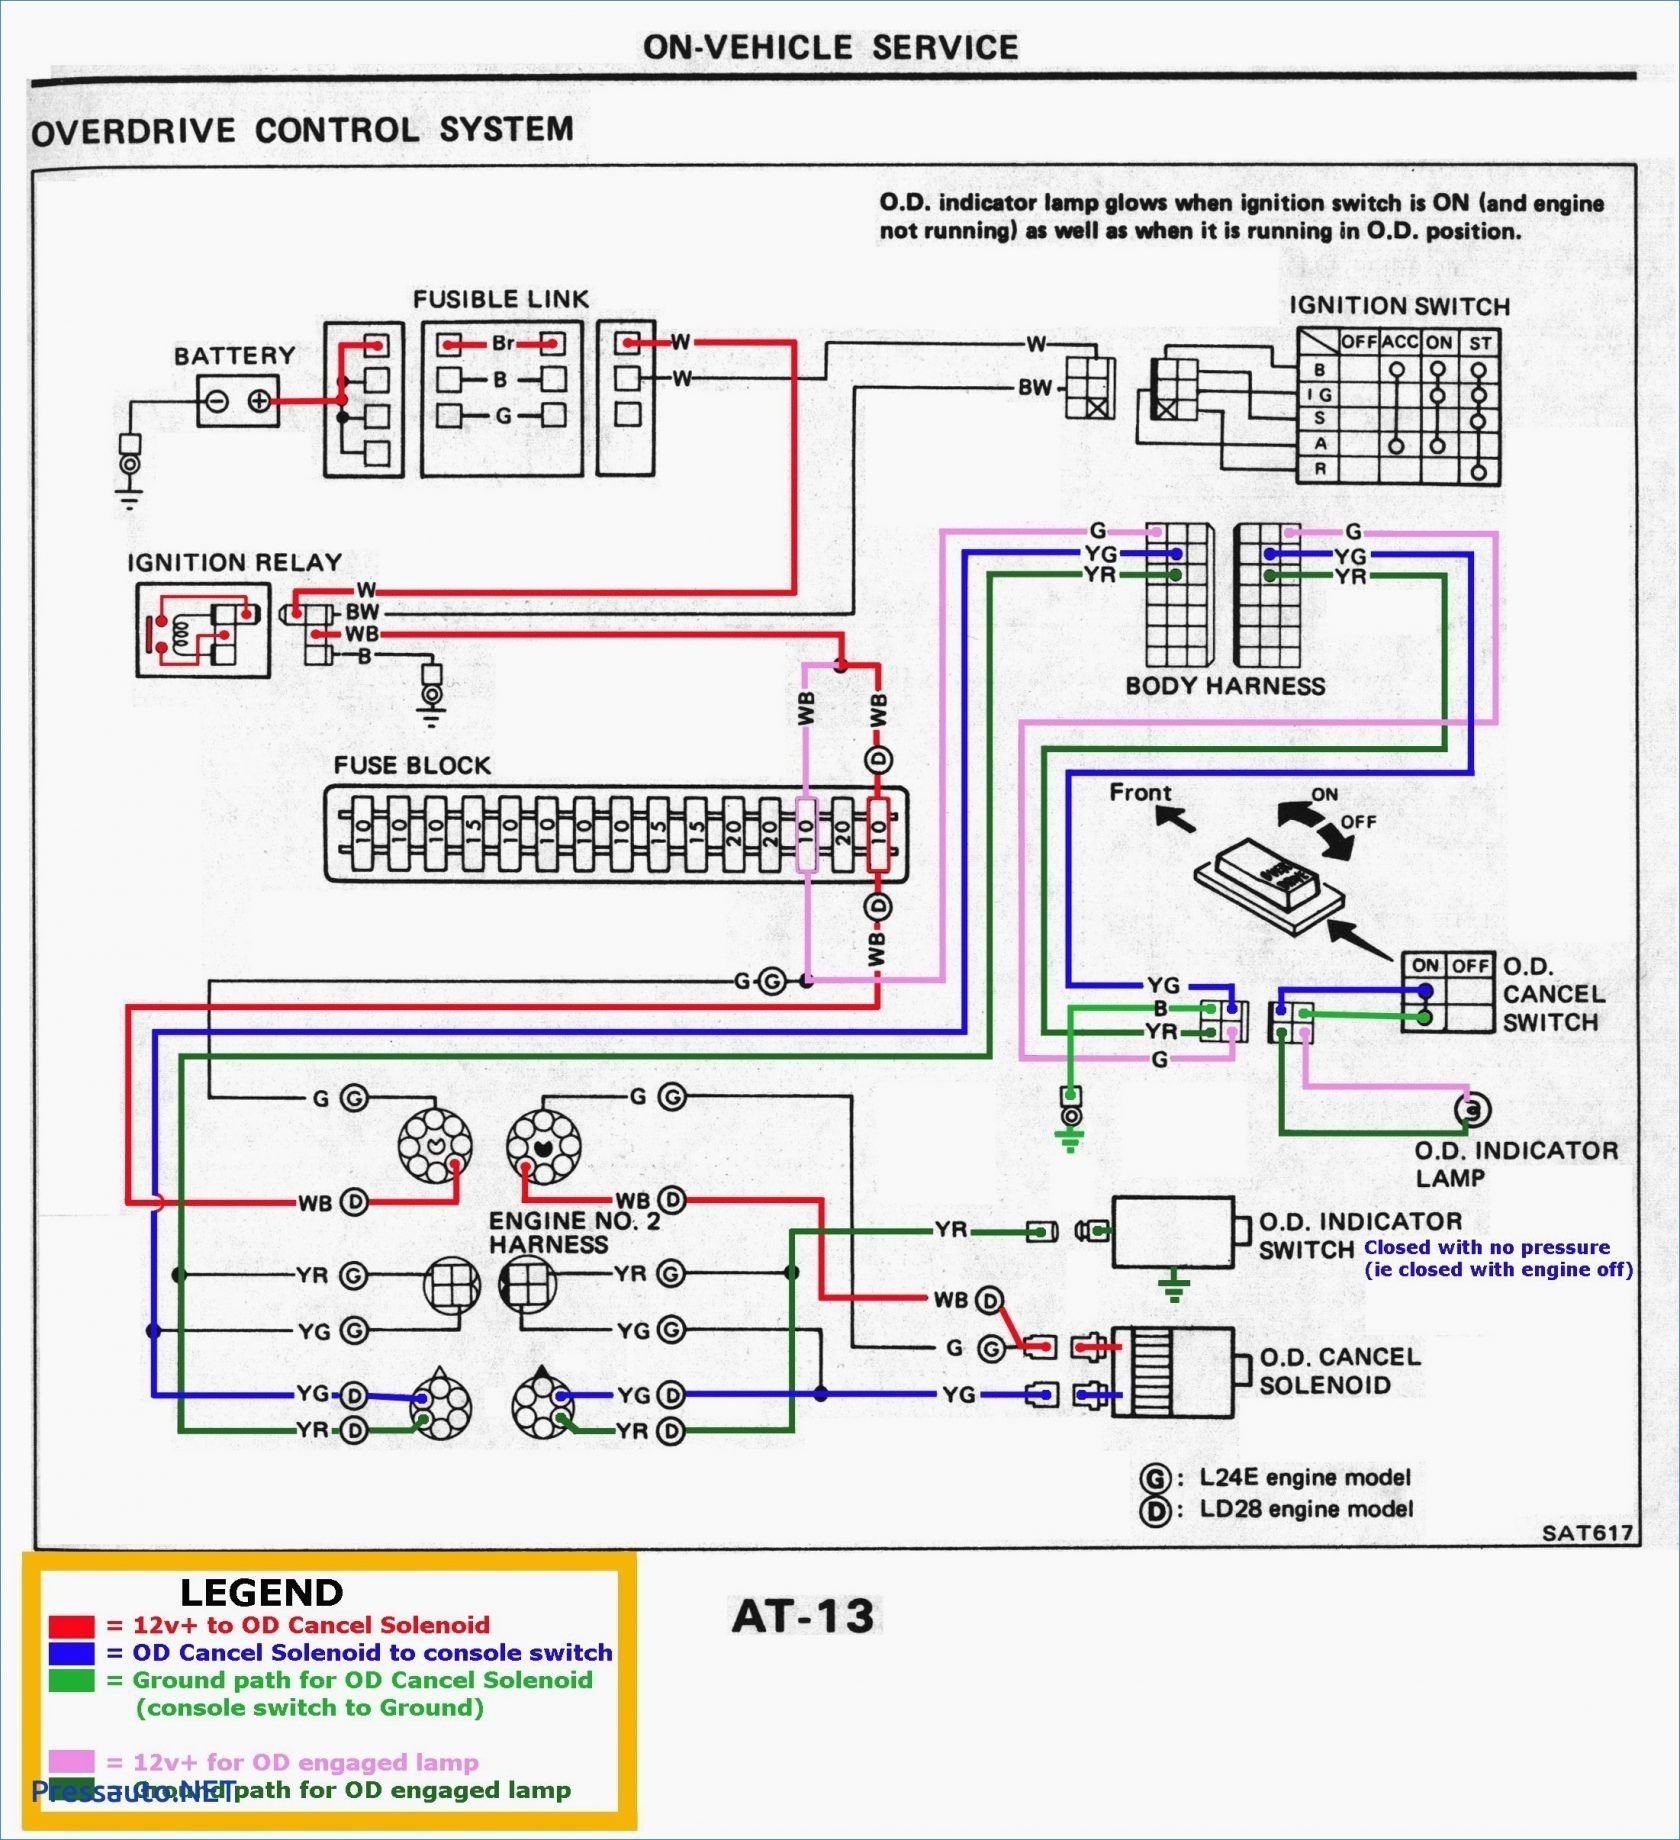 1988 Chevy Truck Radio Wiring Diagram Bose Wiring Diagrams Of 1988 Chevy Truck Radio Wiring Diagram